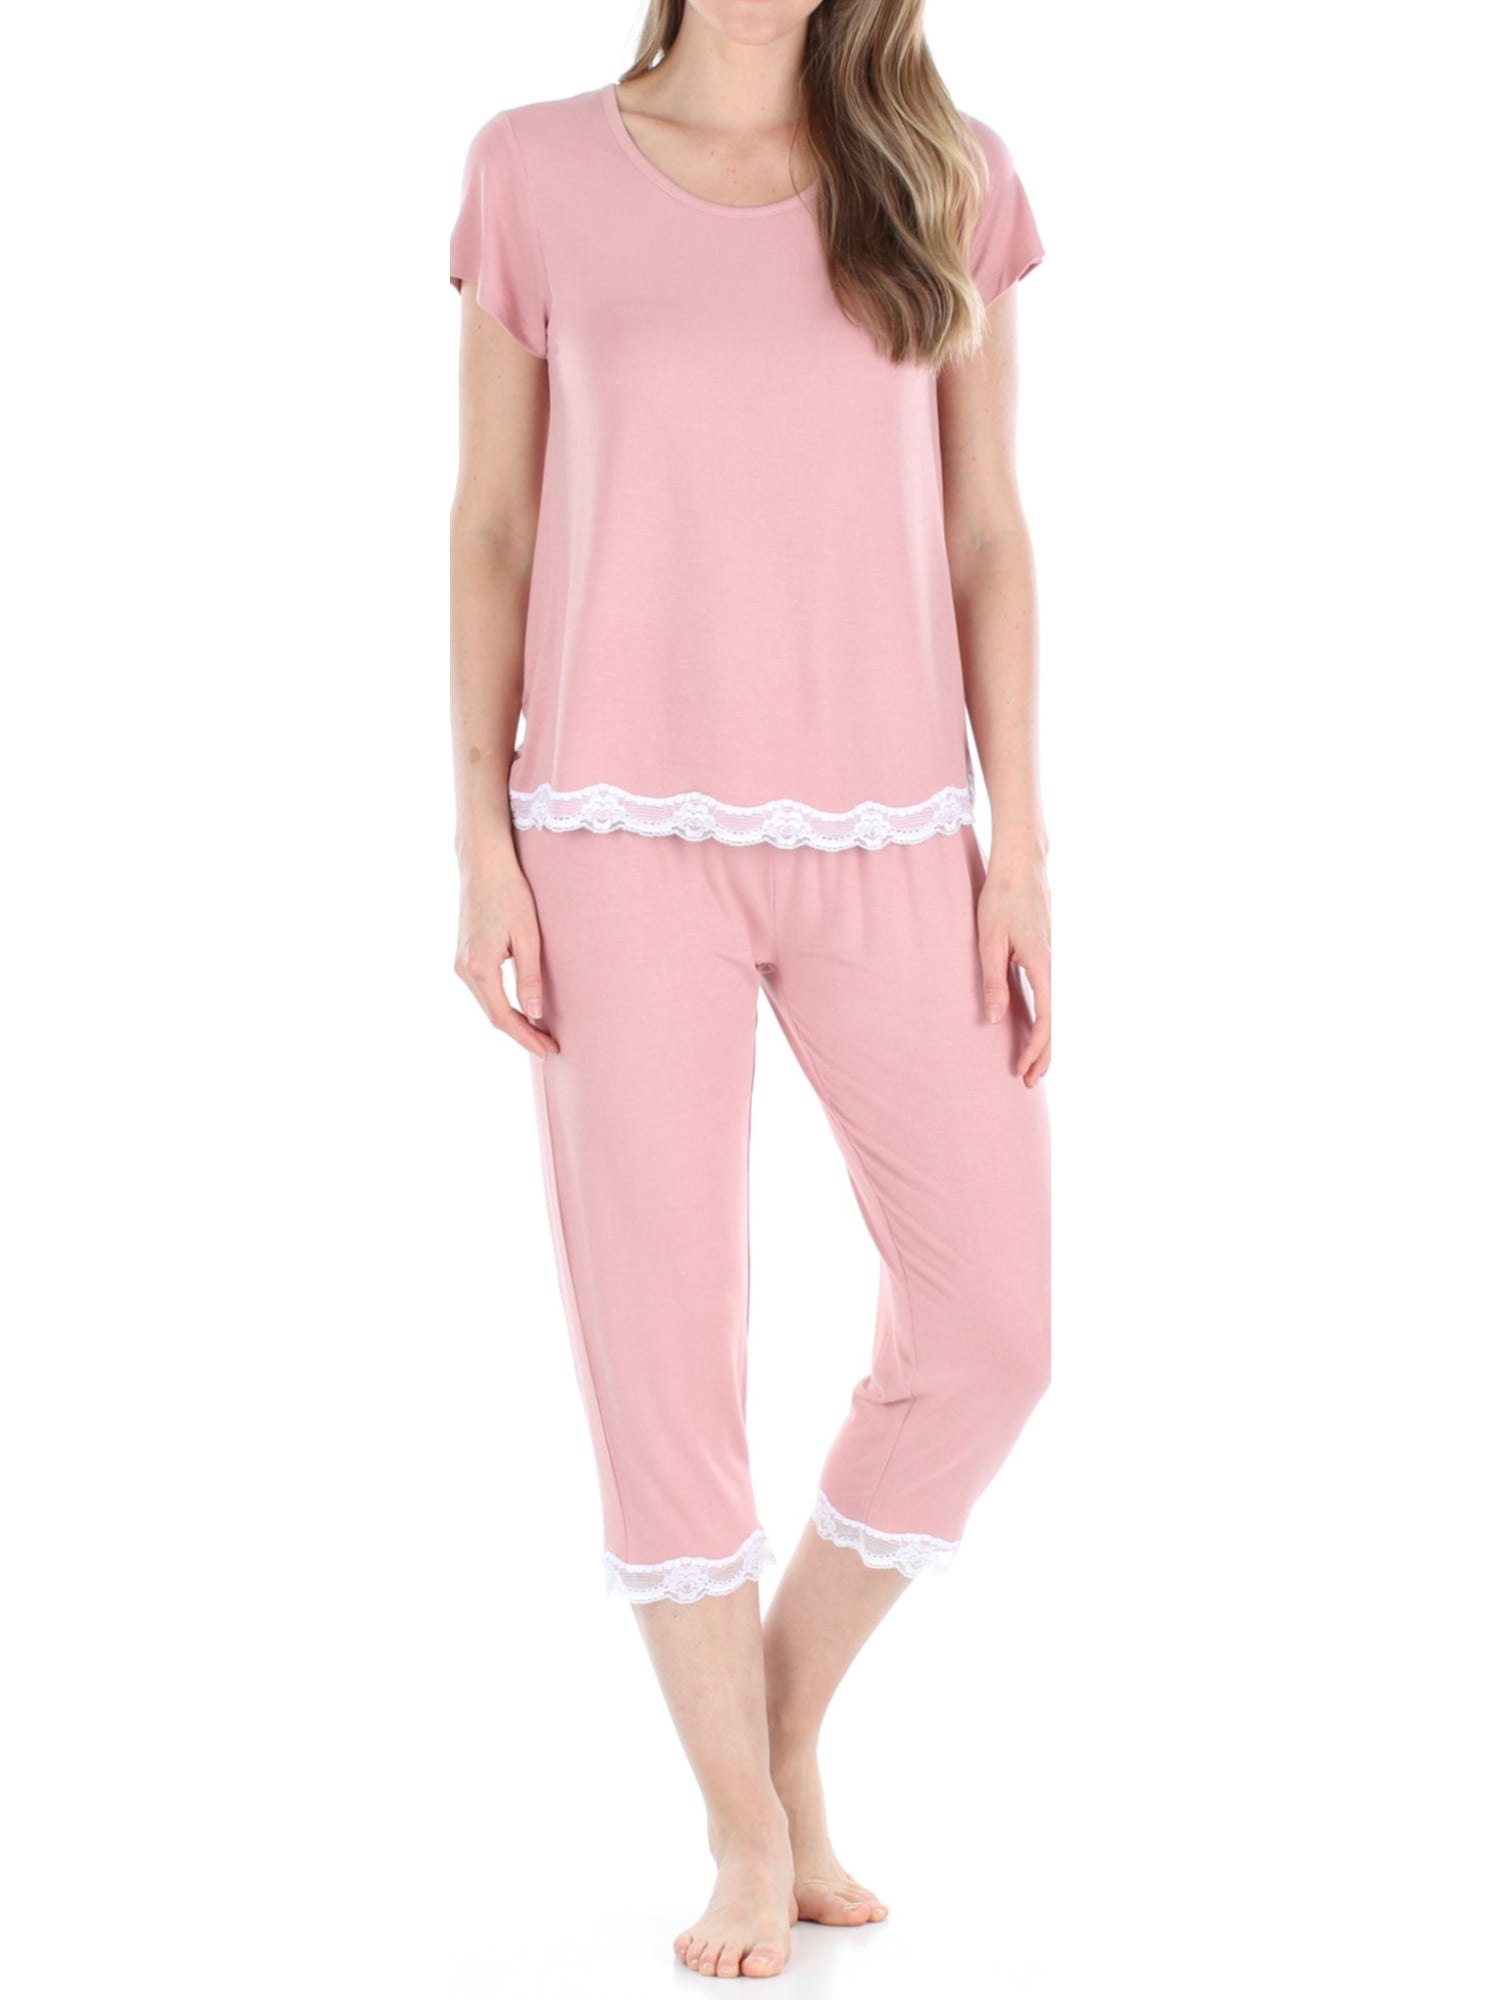 Two Pieces Pajamas Sets Short Pajamas Set Sleepwear Bamboo Tank Tops Pjs Set for Women